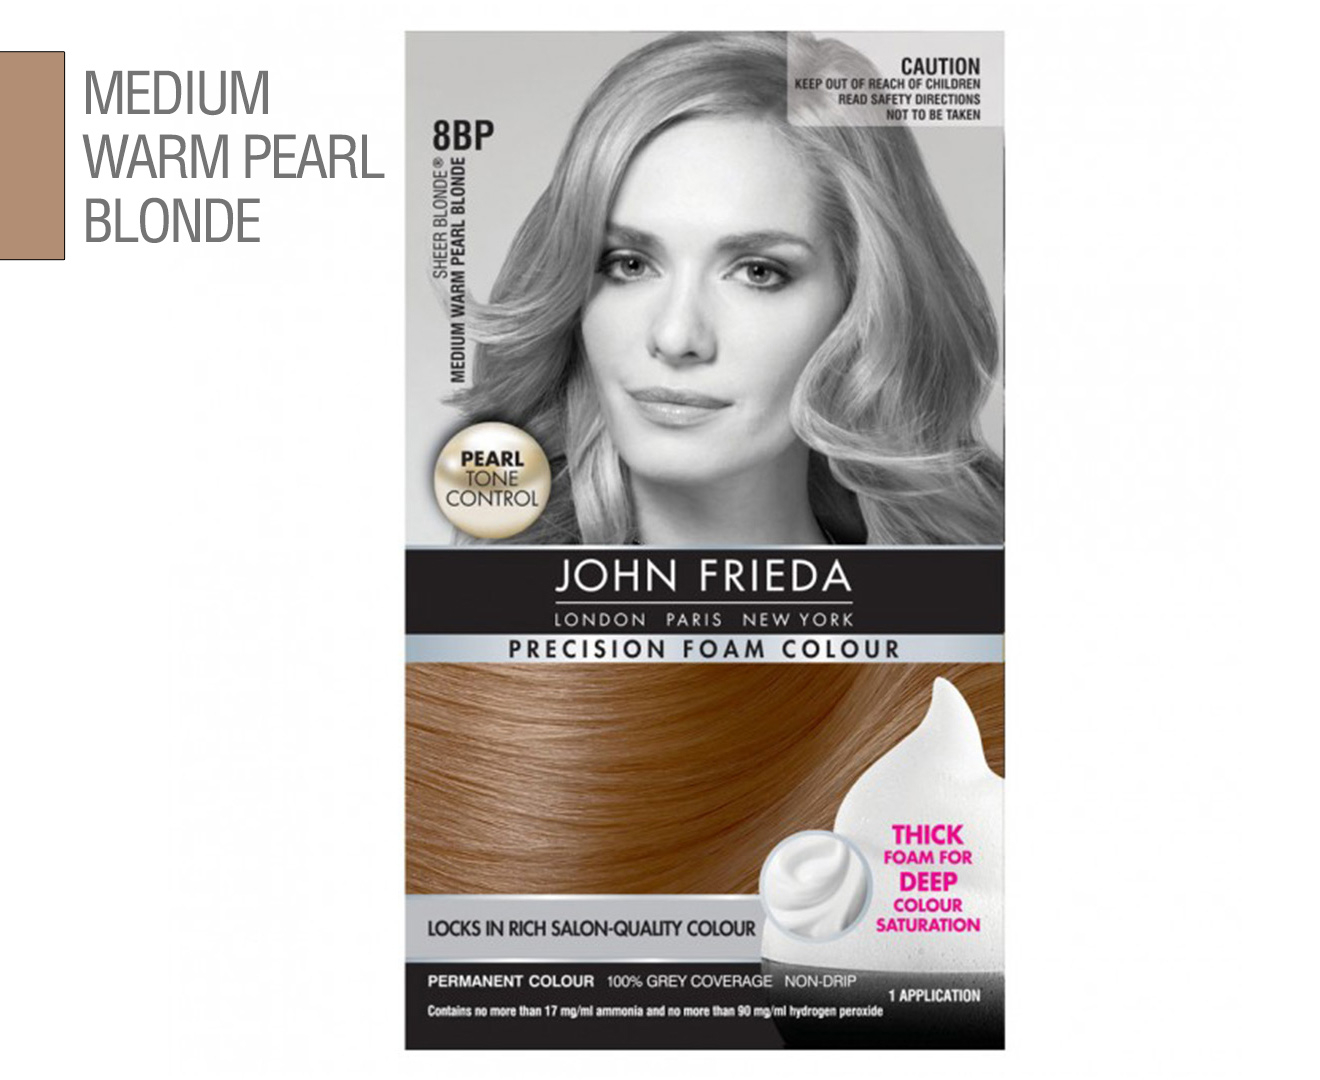 John Frieda Precision Foam Colour 1-Pack - 8BP Medium Warm Pearl Blonde |  .au